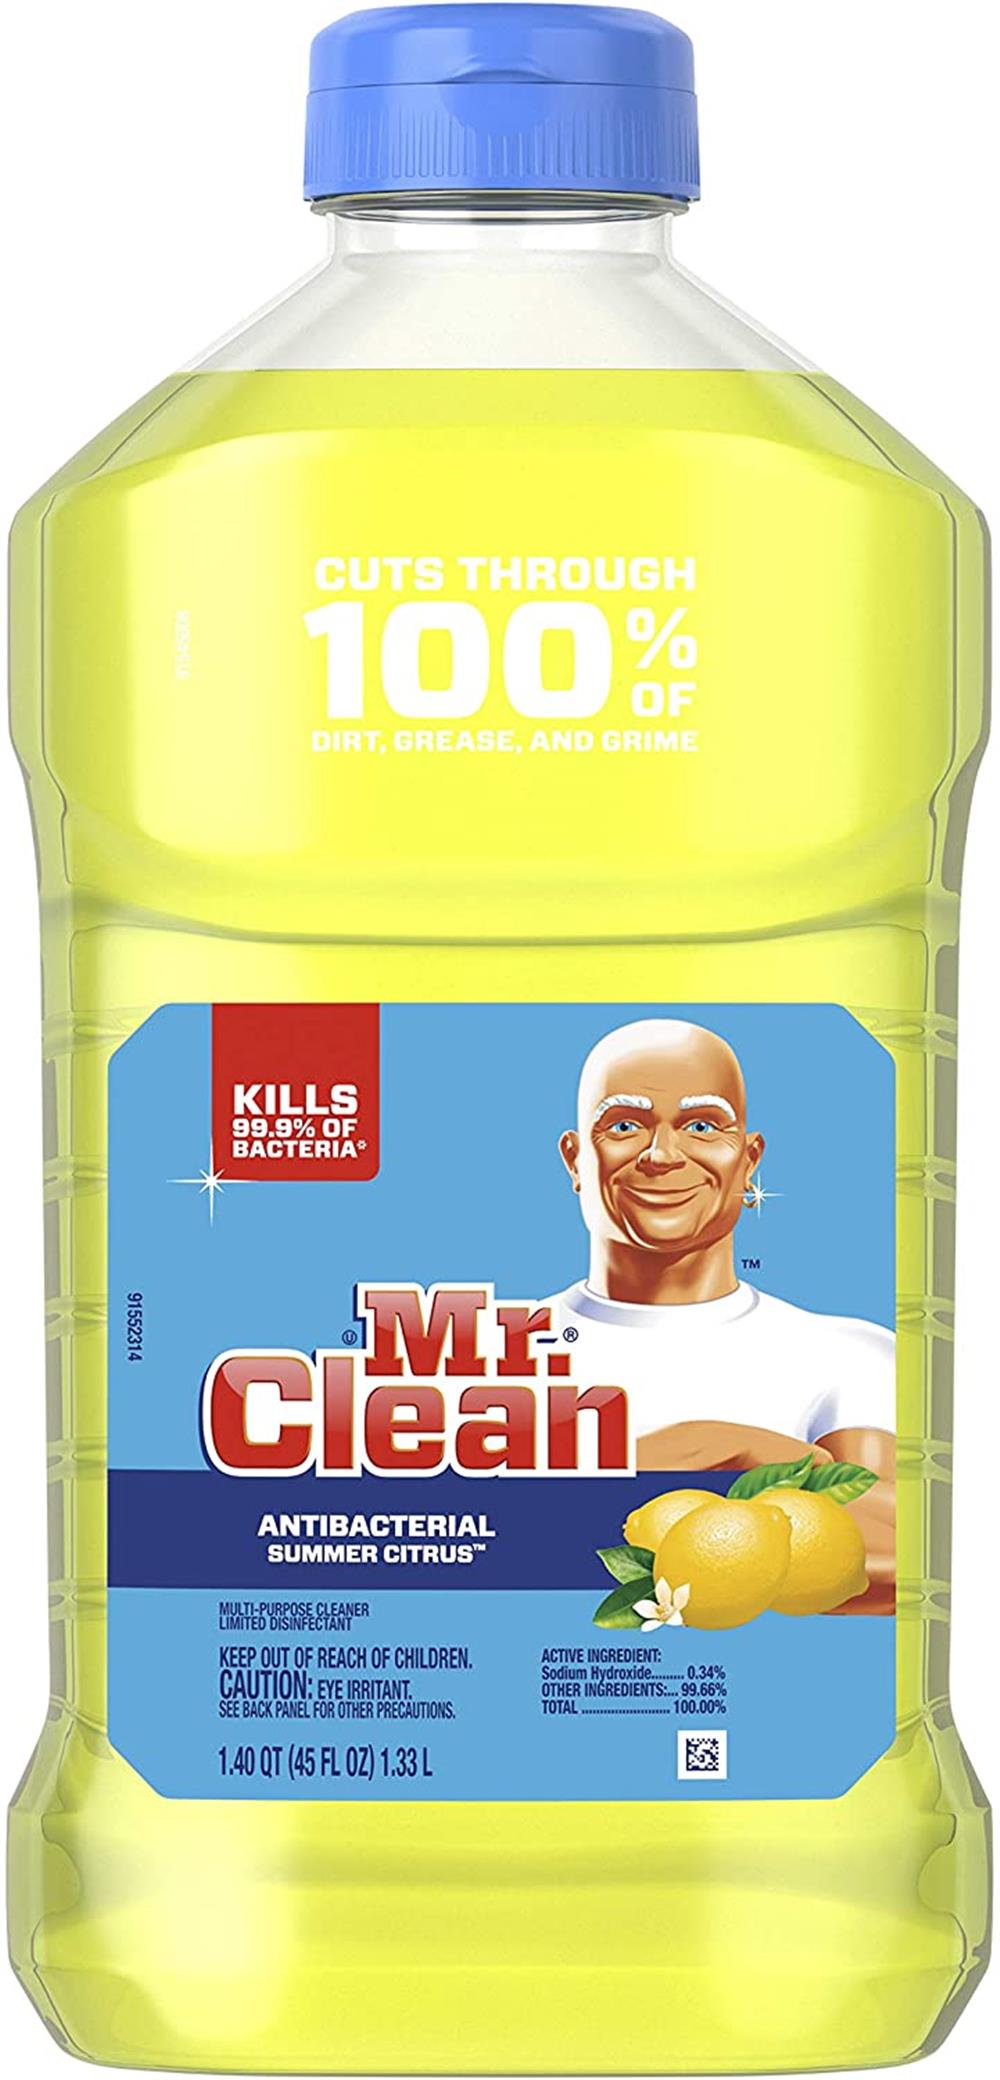 Mr Clean Antibacterial Multi-Surface Cleaner, Summer Citrus, 45 fl oz